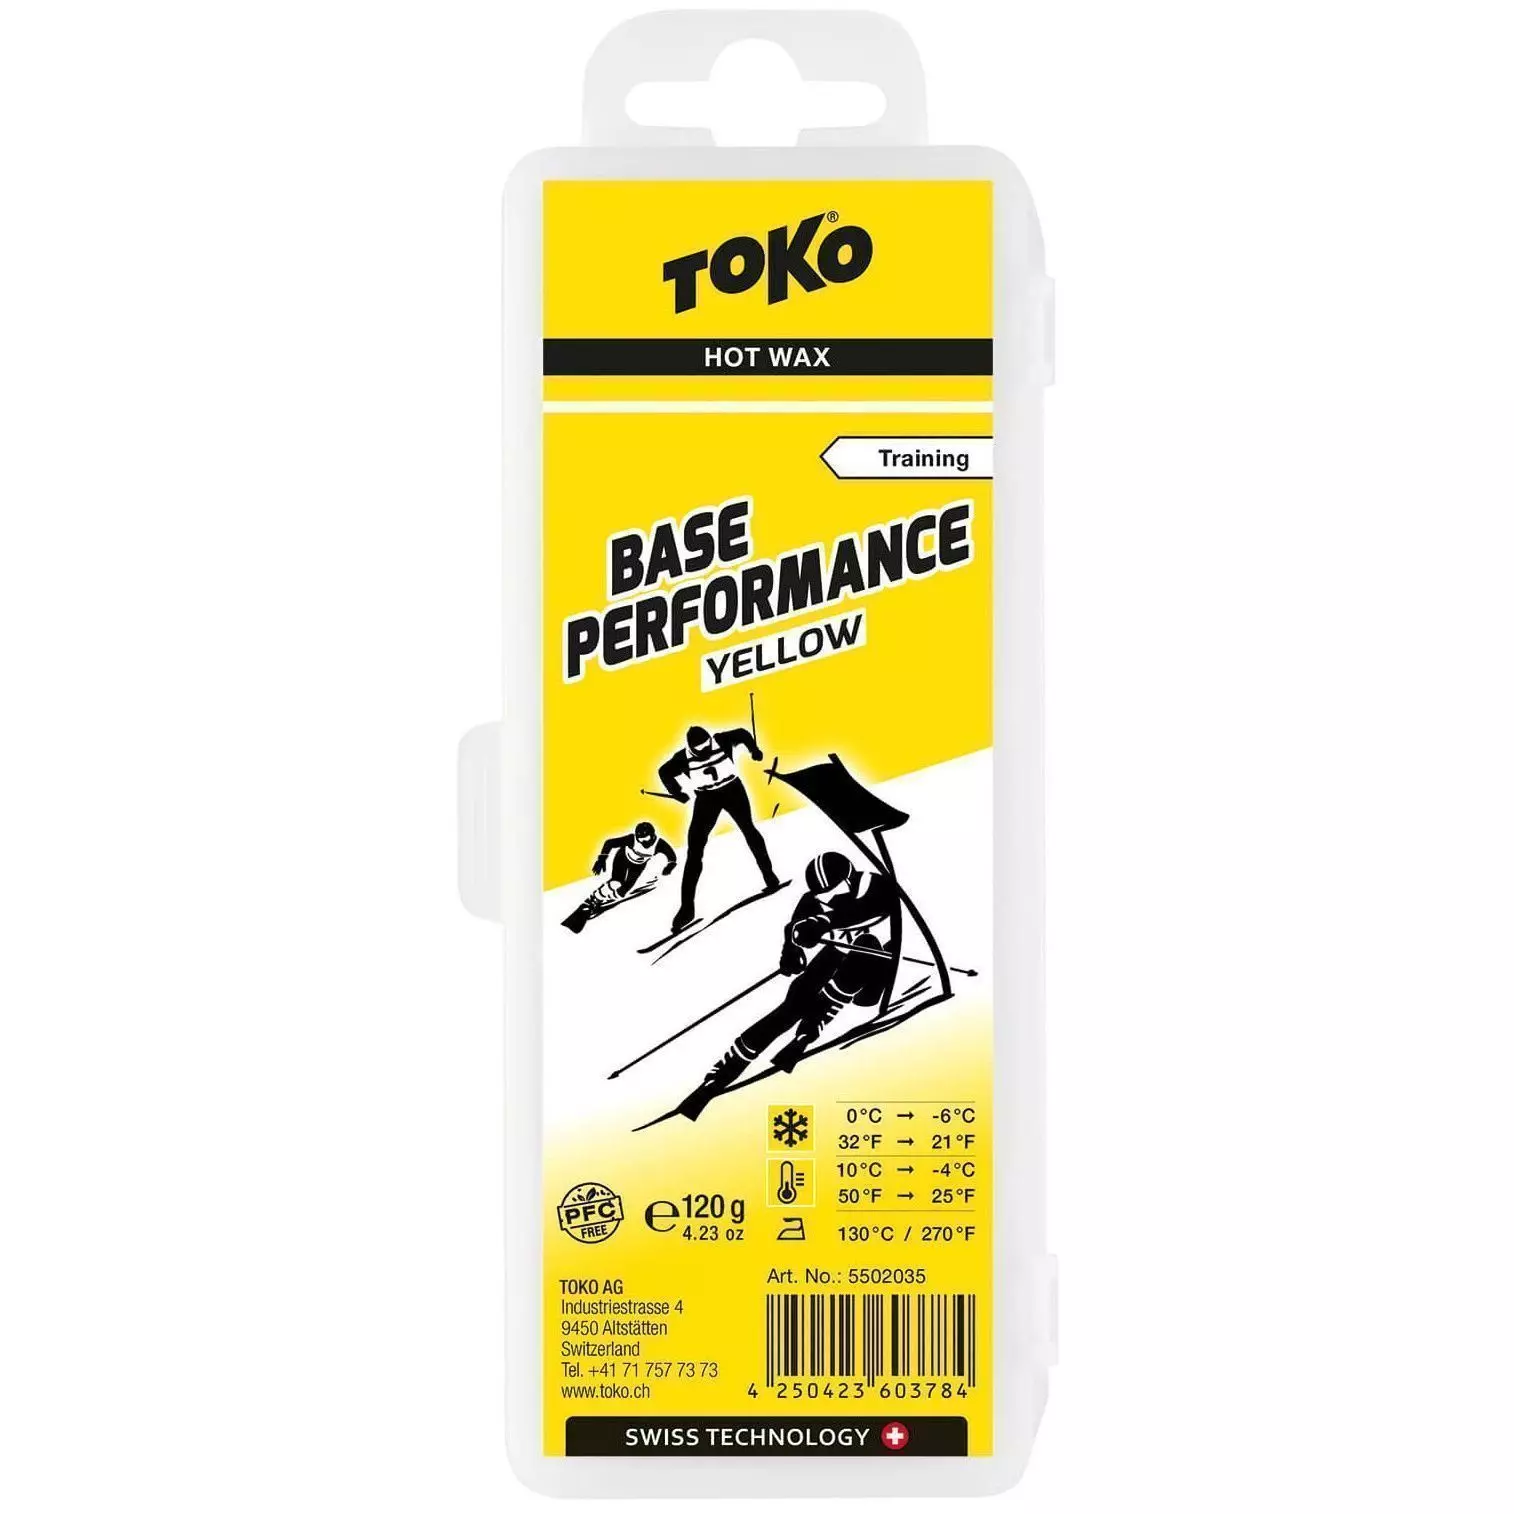 Hot Wax Toko Base Performance 120g